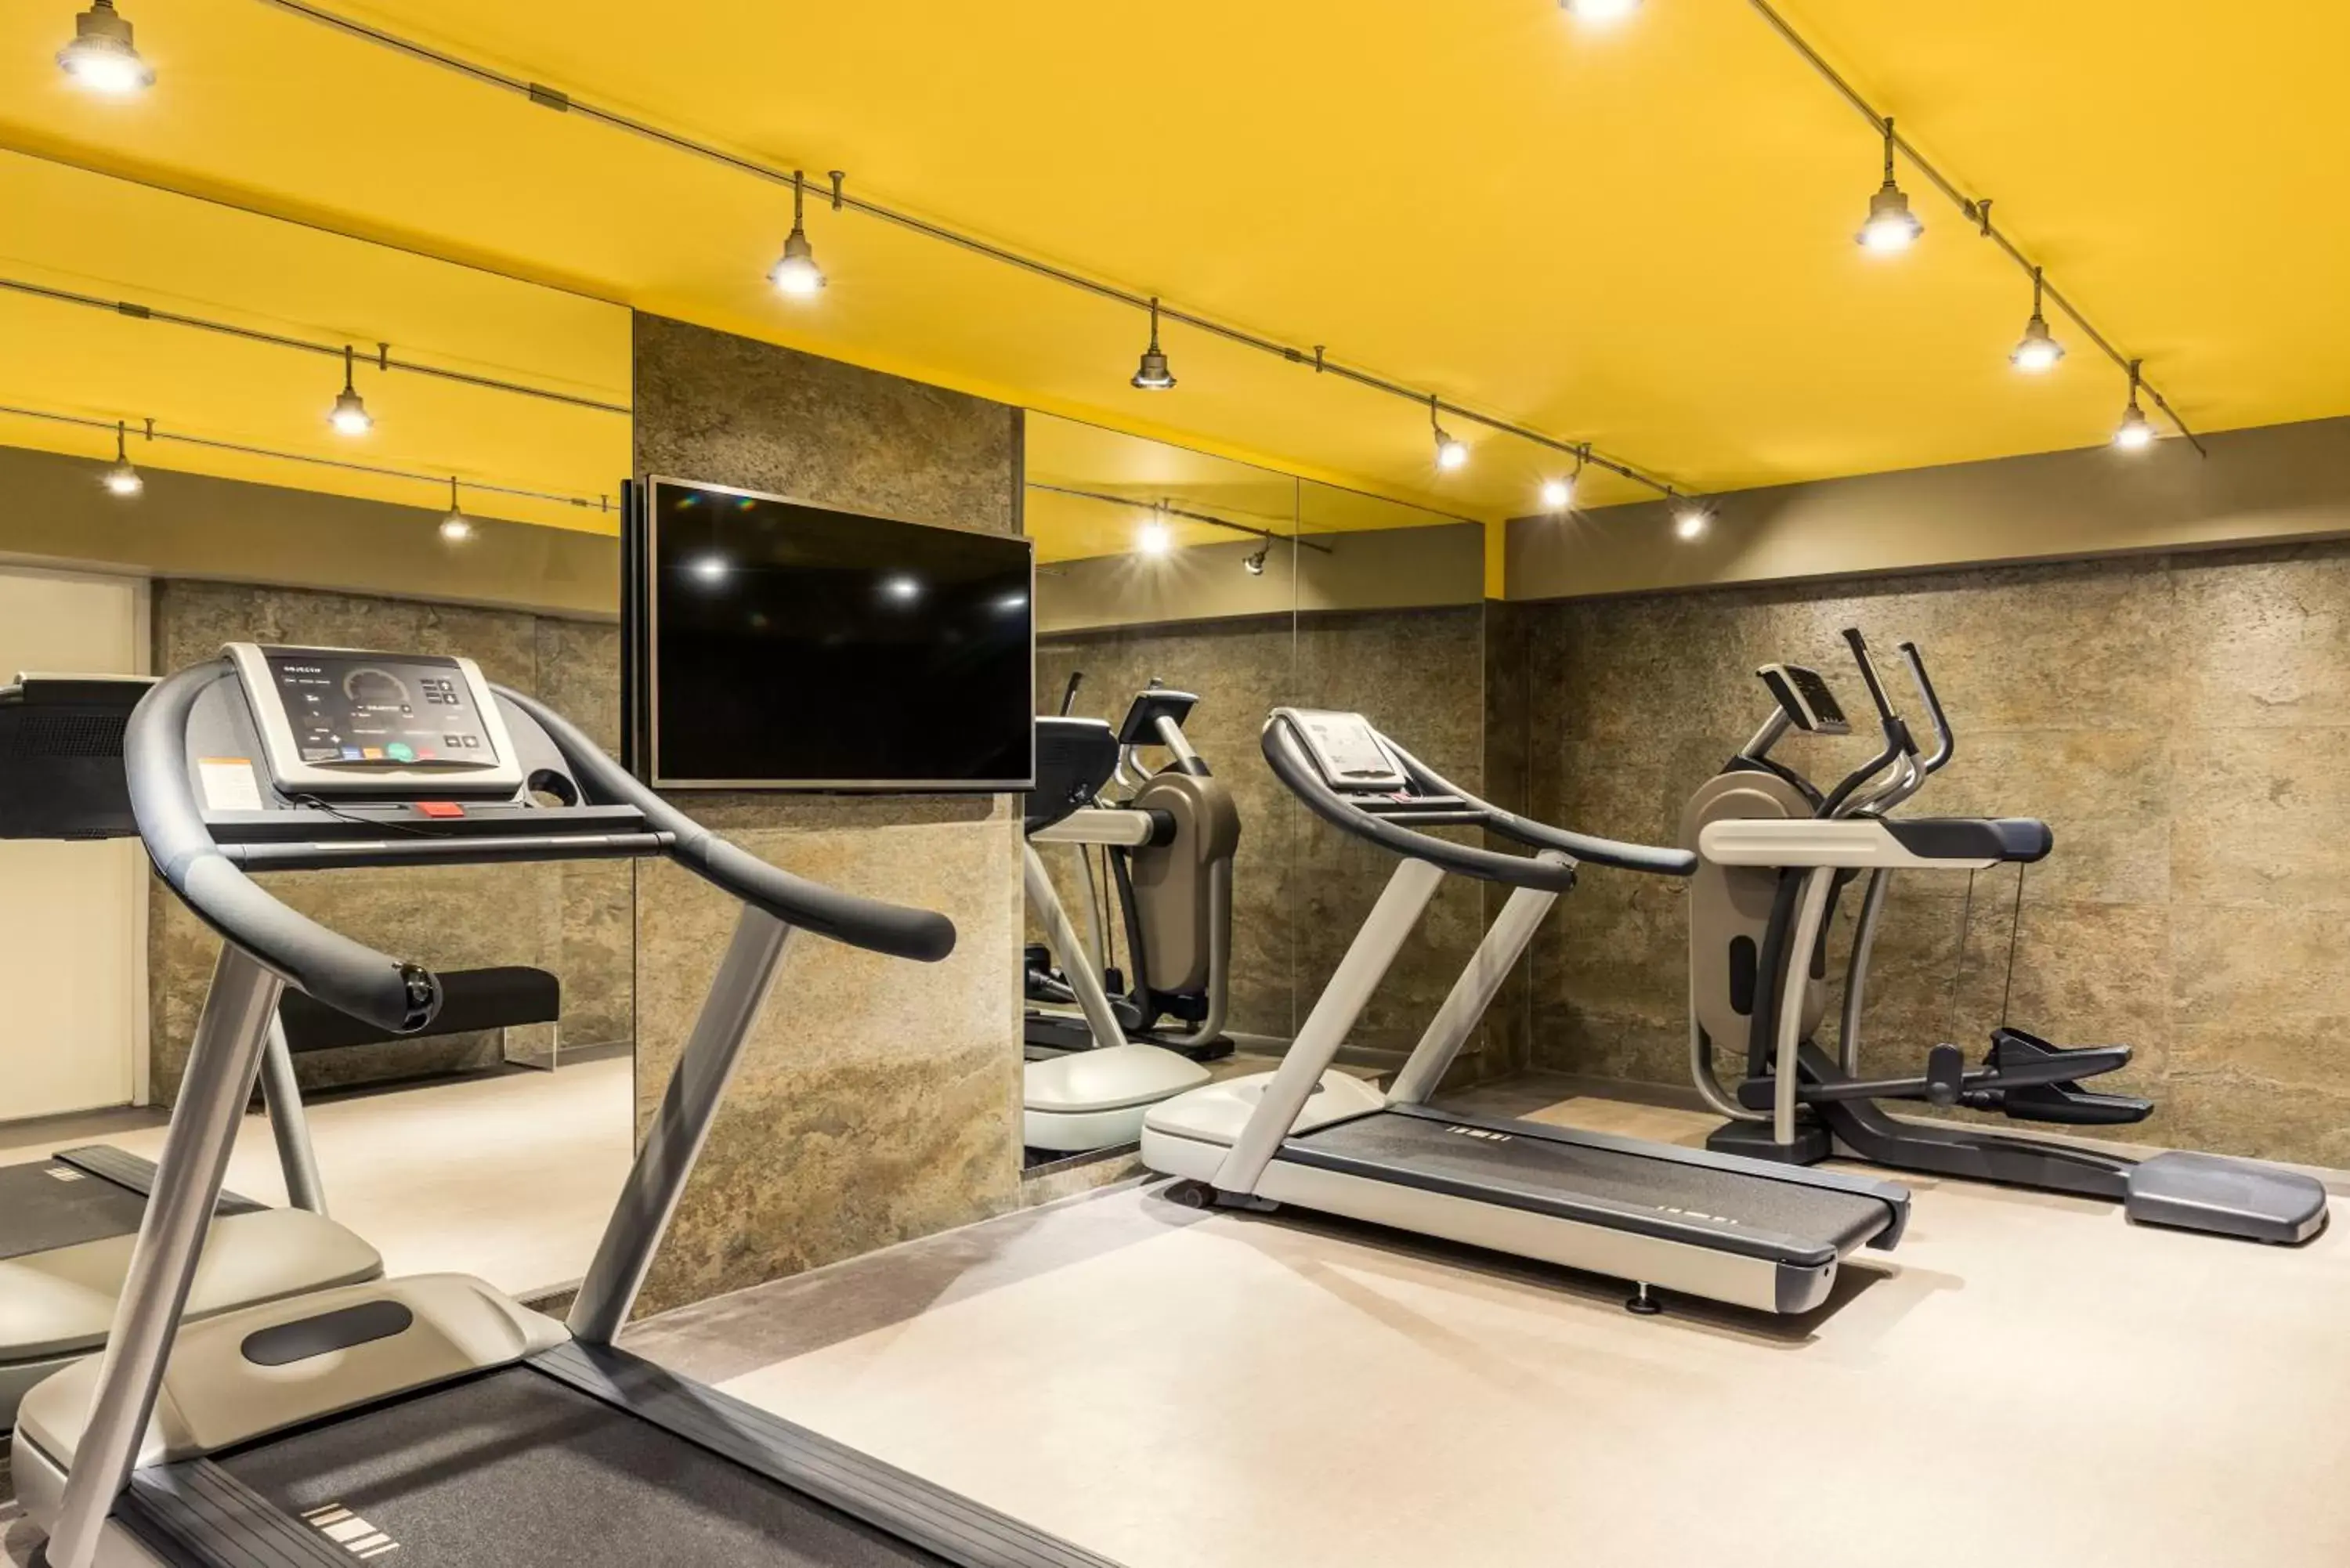 Fitness centre/facilities, Fitness Center/Facilities in Mercure Paris Gare De Lyon TGV